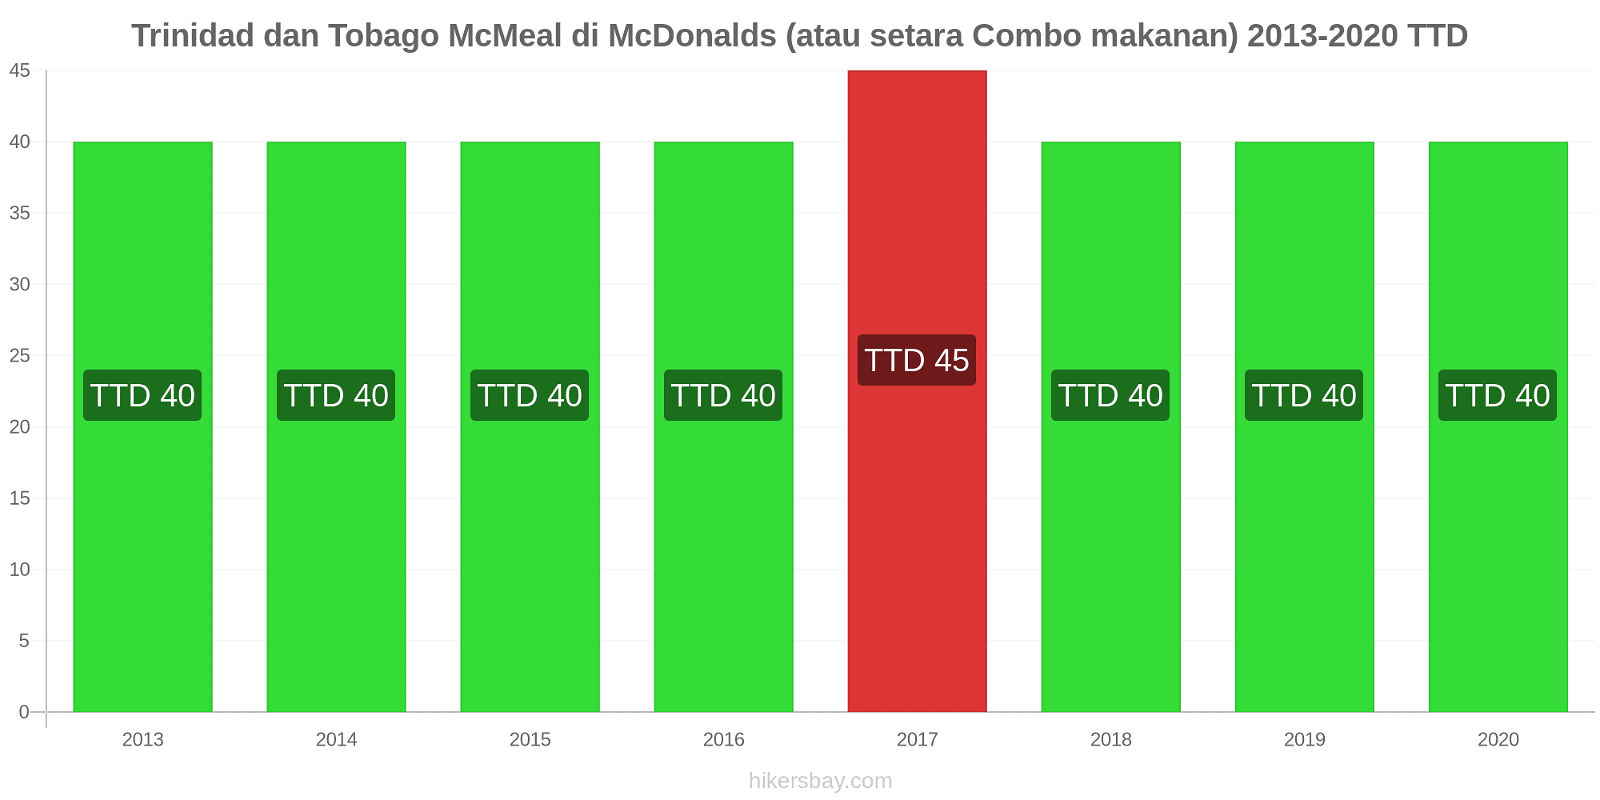 Trinidad dan Tobago perubahan harga McMeal di McDonalds (atau setara Combo makanan) hikersbay.com